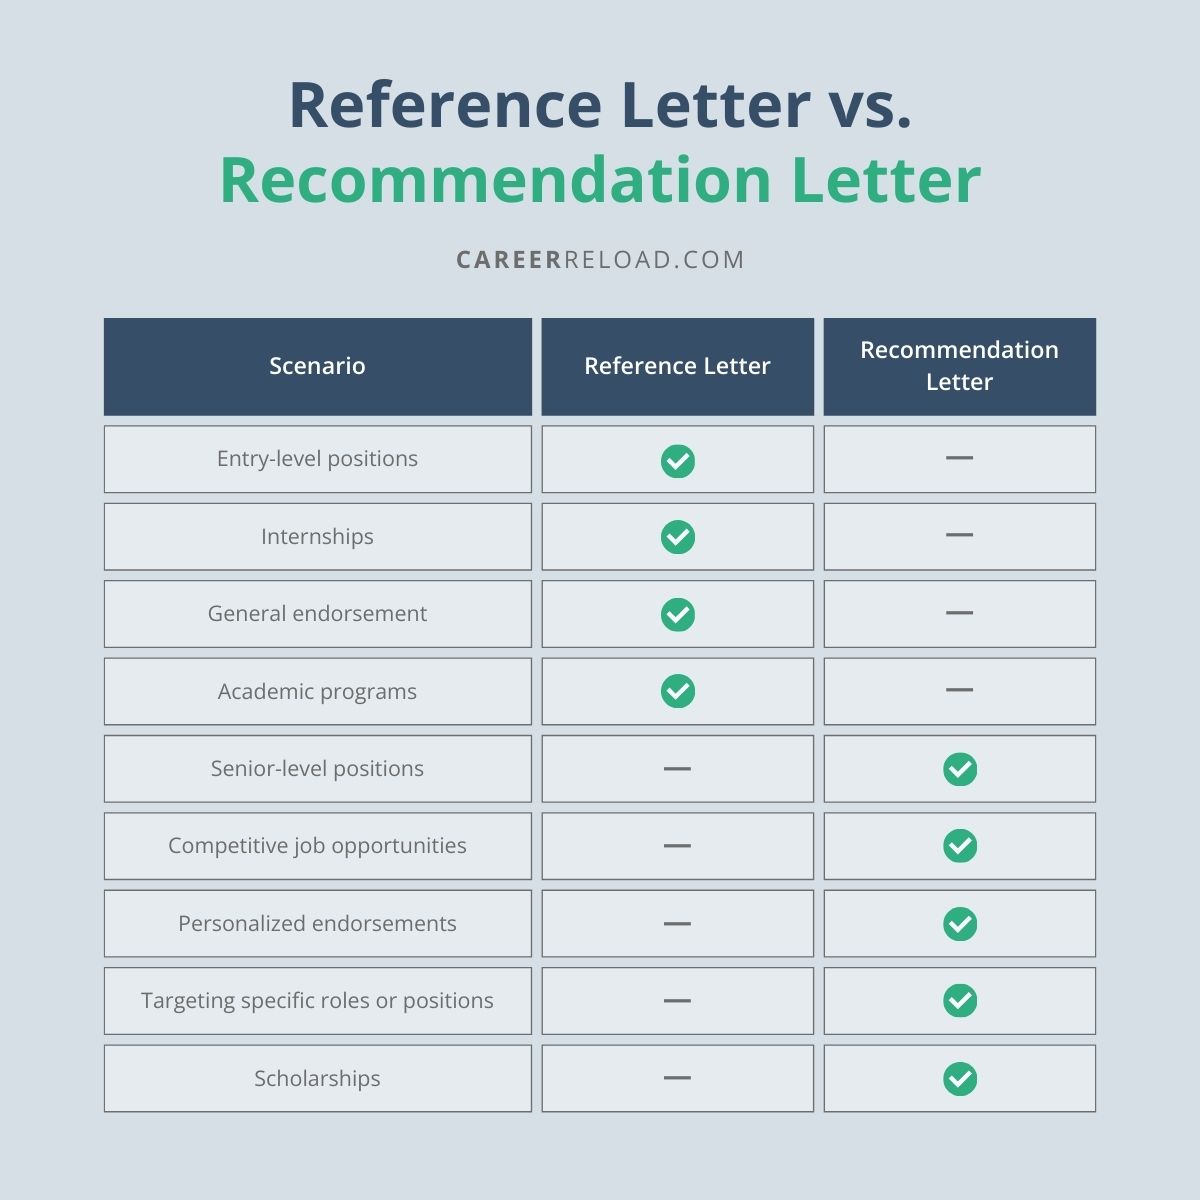 Reference Letter vs. Recommendation Letter